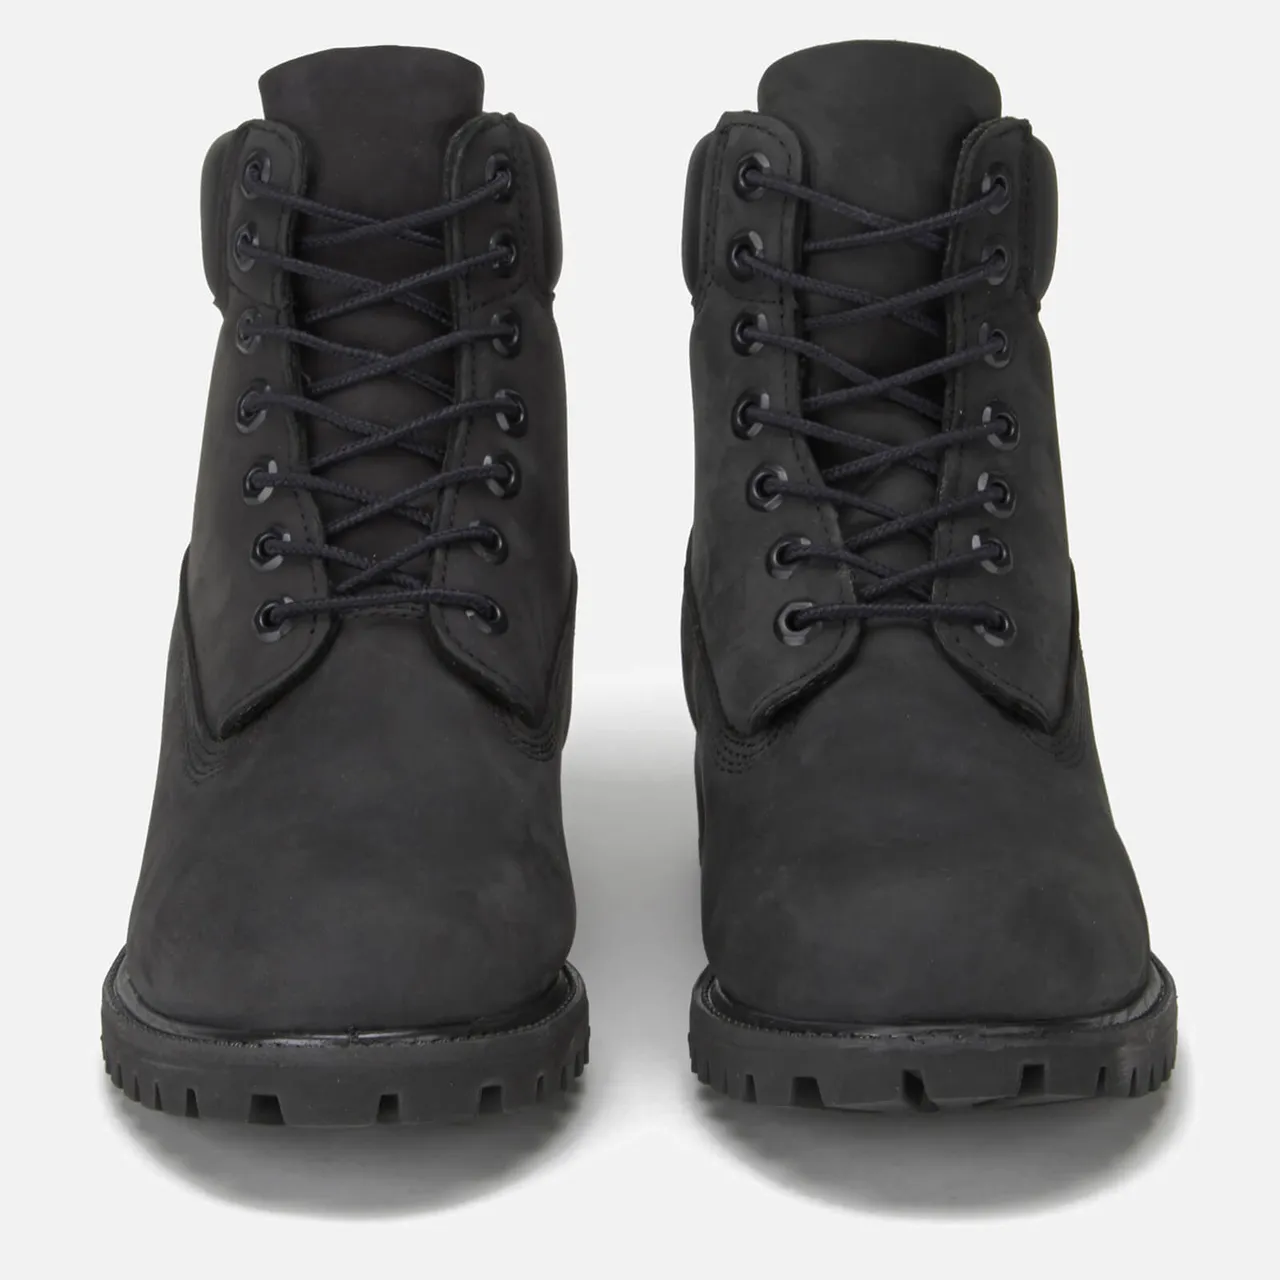 Timberland Men's 6 Inch Premium Waterproof Boots - Black - UK